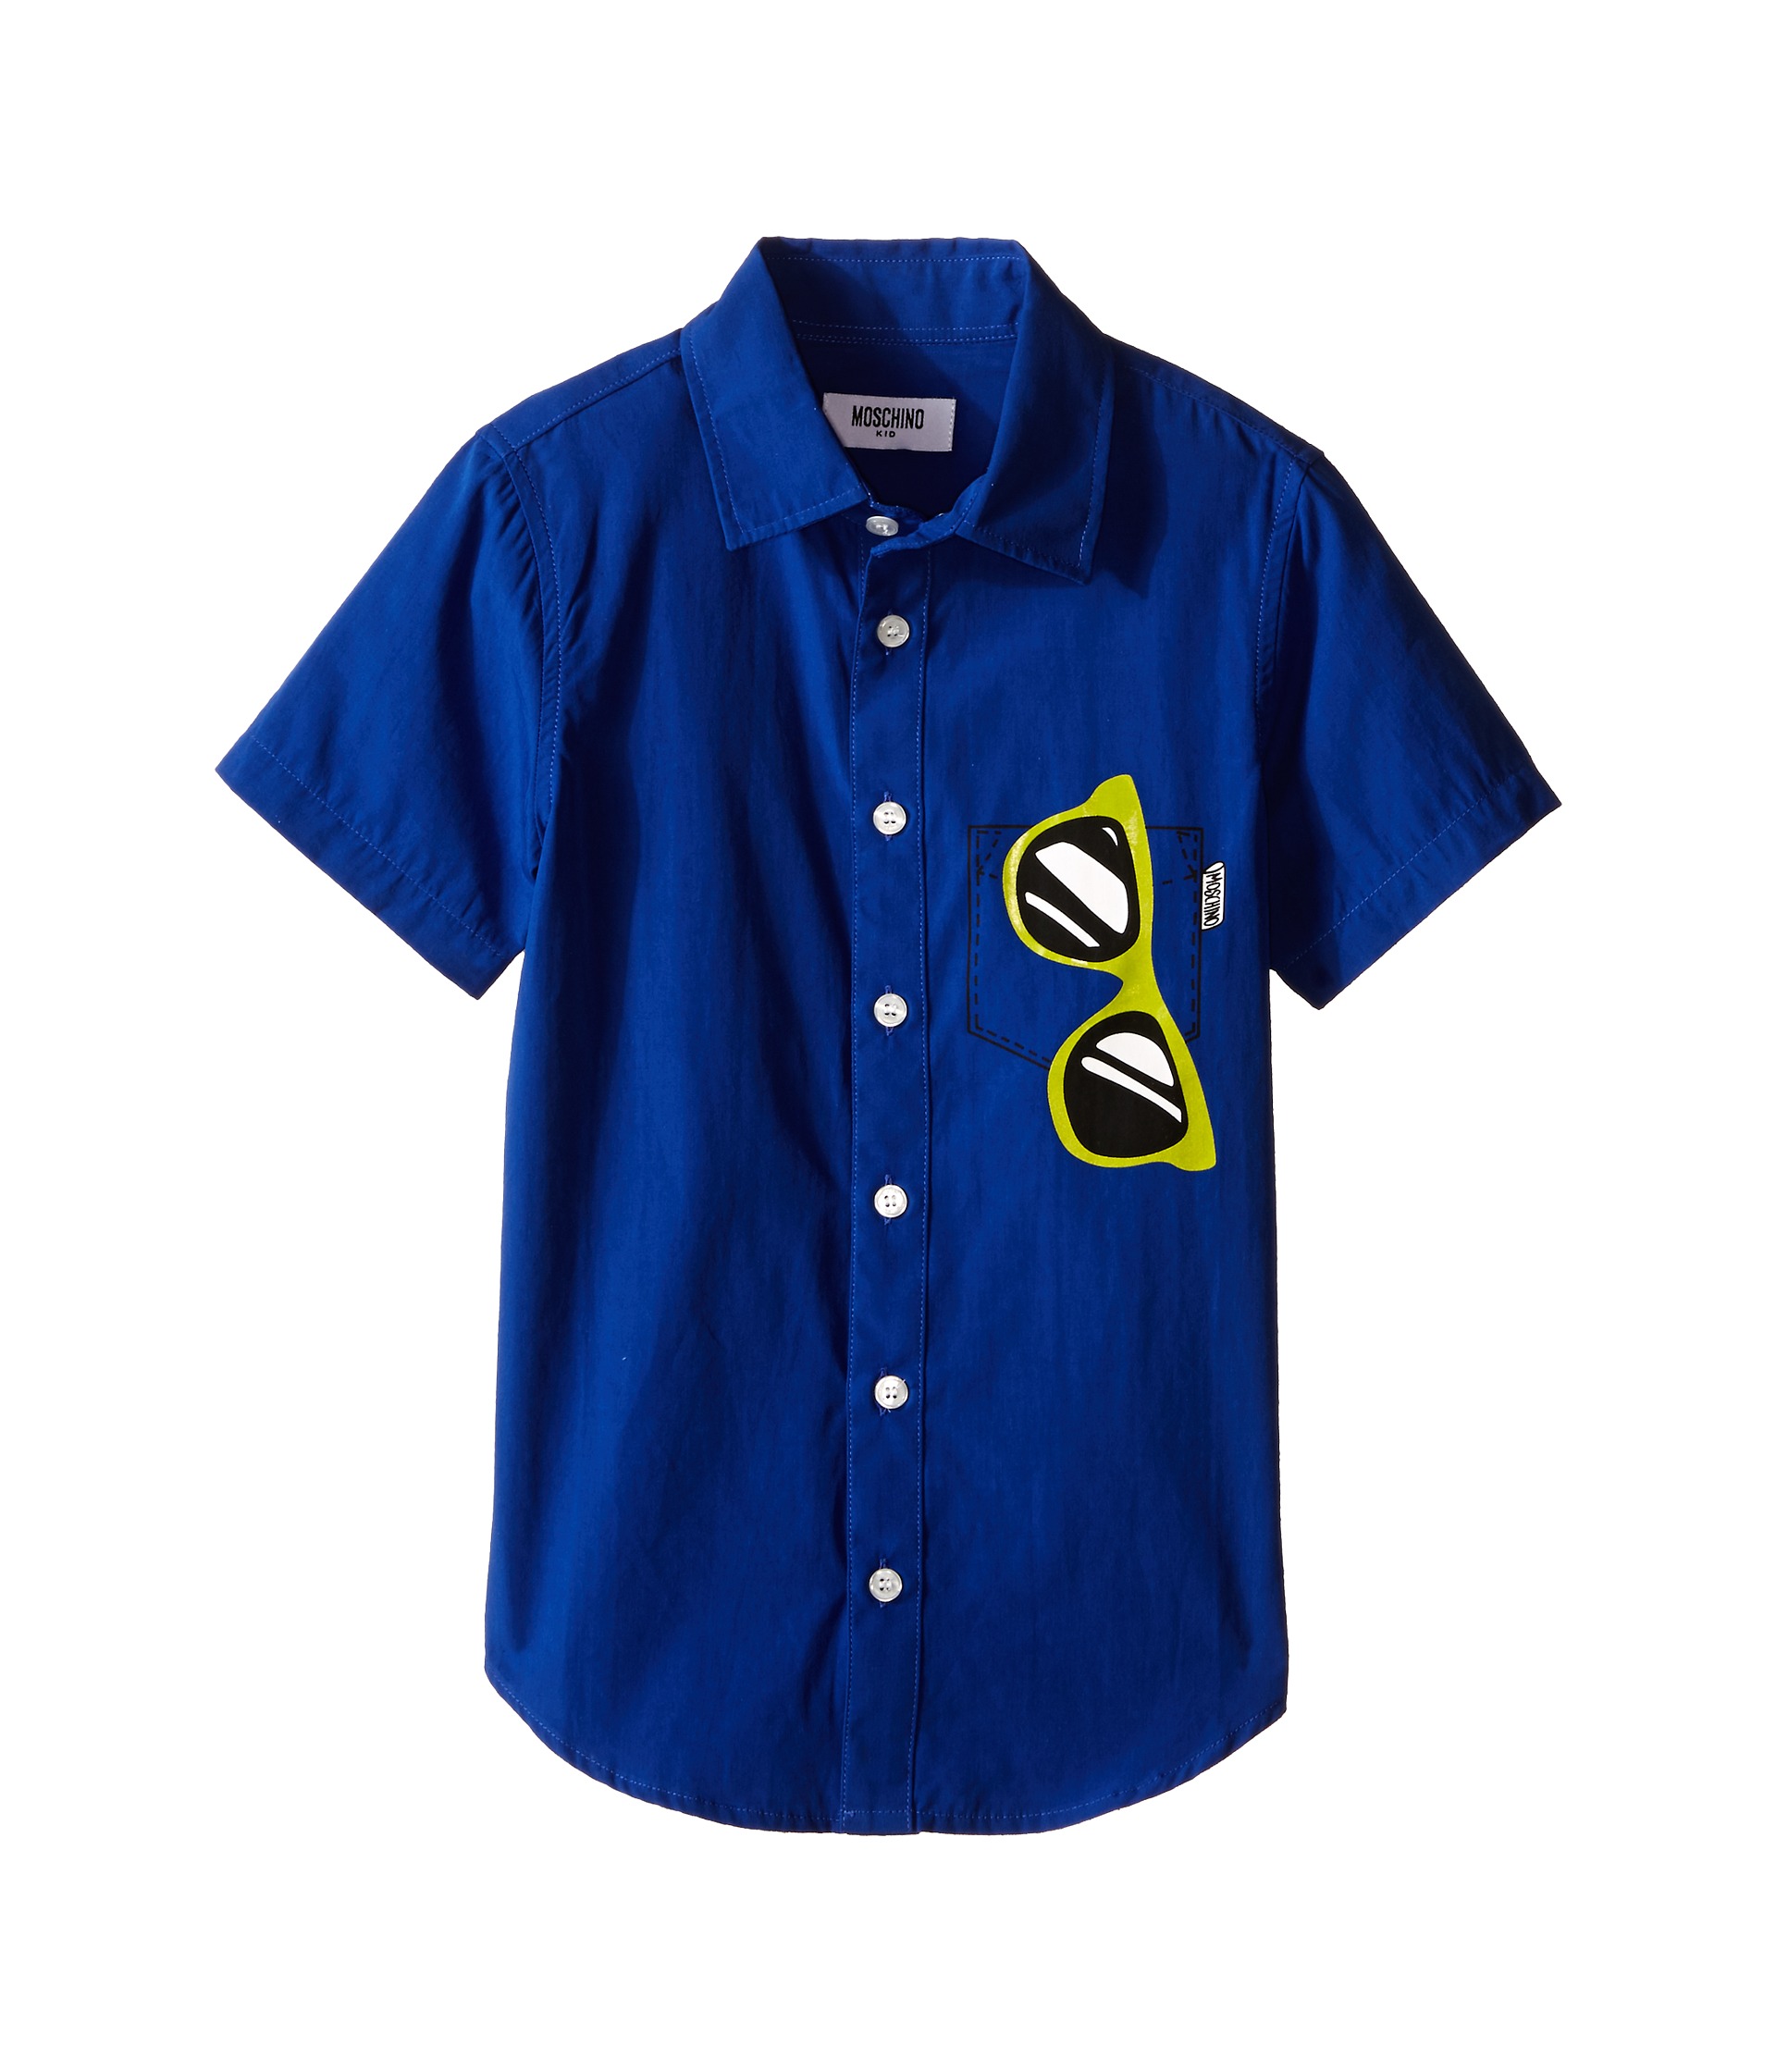 Moschino Kids Short Sleeve Button Up Shirt w/ Sunglasses Graphic ...